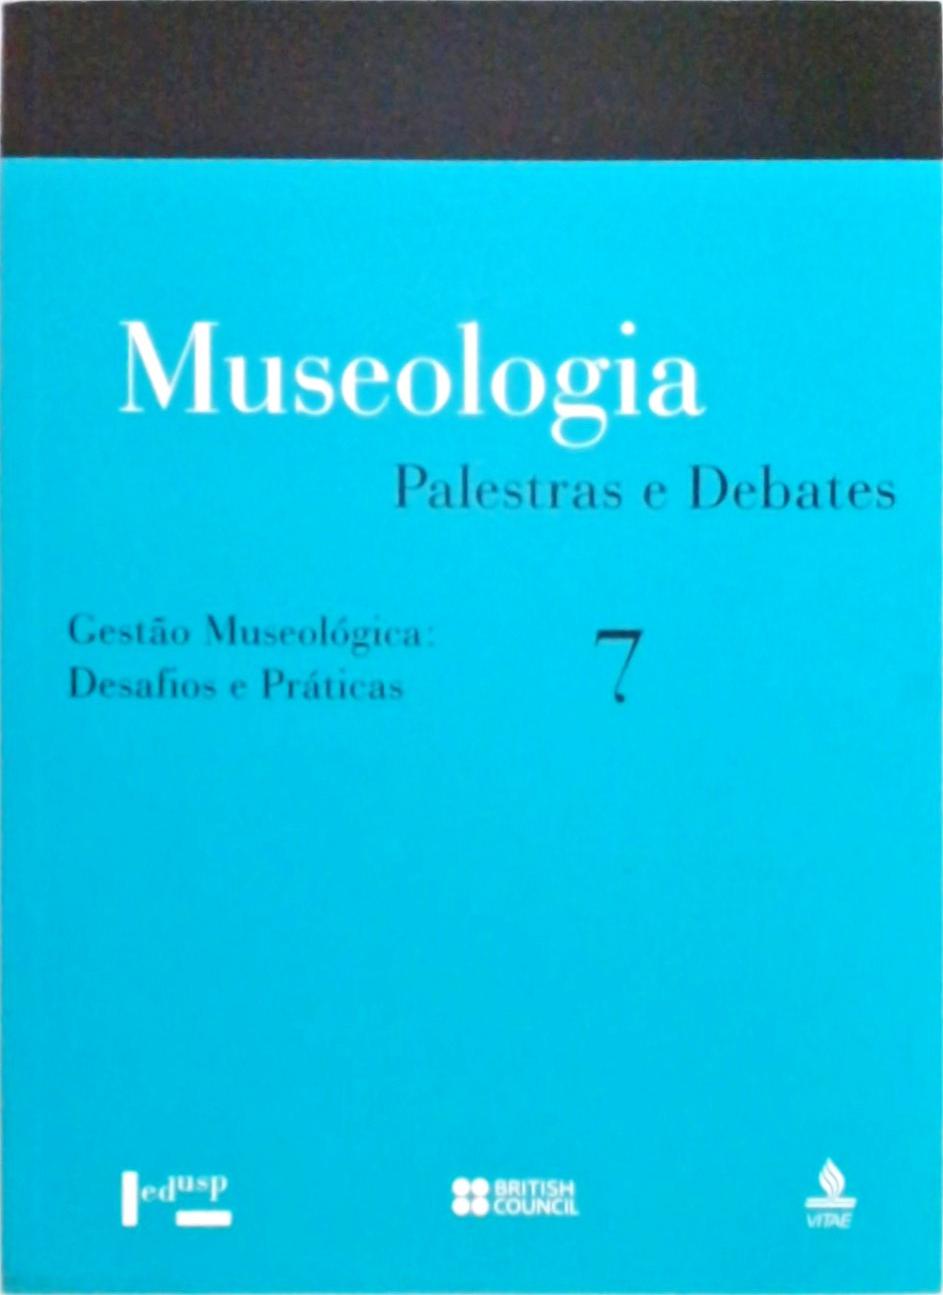 Museologia 7 - Gestão Museológica